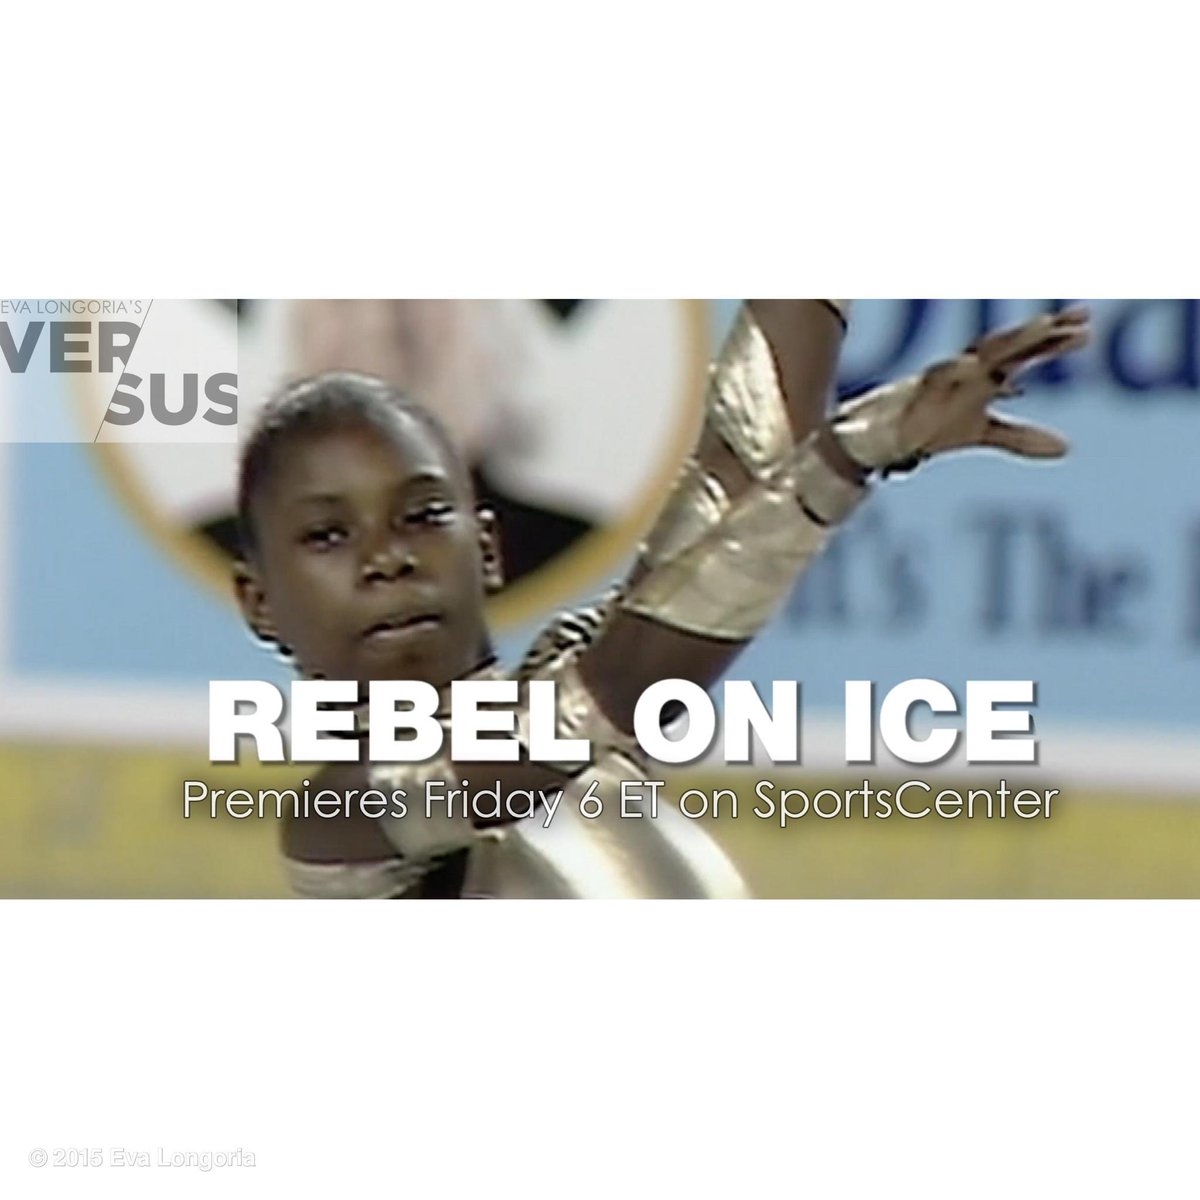 Surya Bonaly once landed a backflip & didn't win! Watch #RebelOnIce by @UnfoRETTAble #Versus: http://t.co/B3Z6so2z0J http://t.co/5Wq8p0CFV0